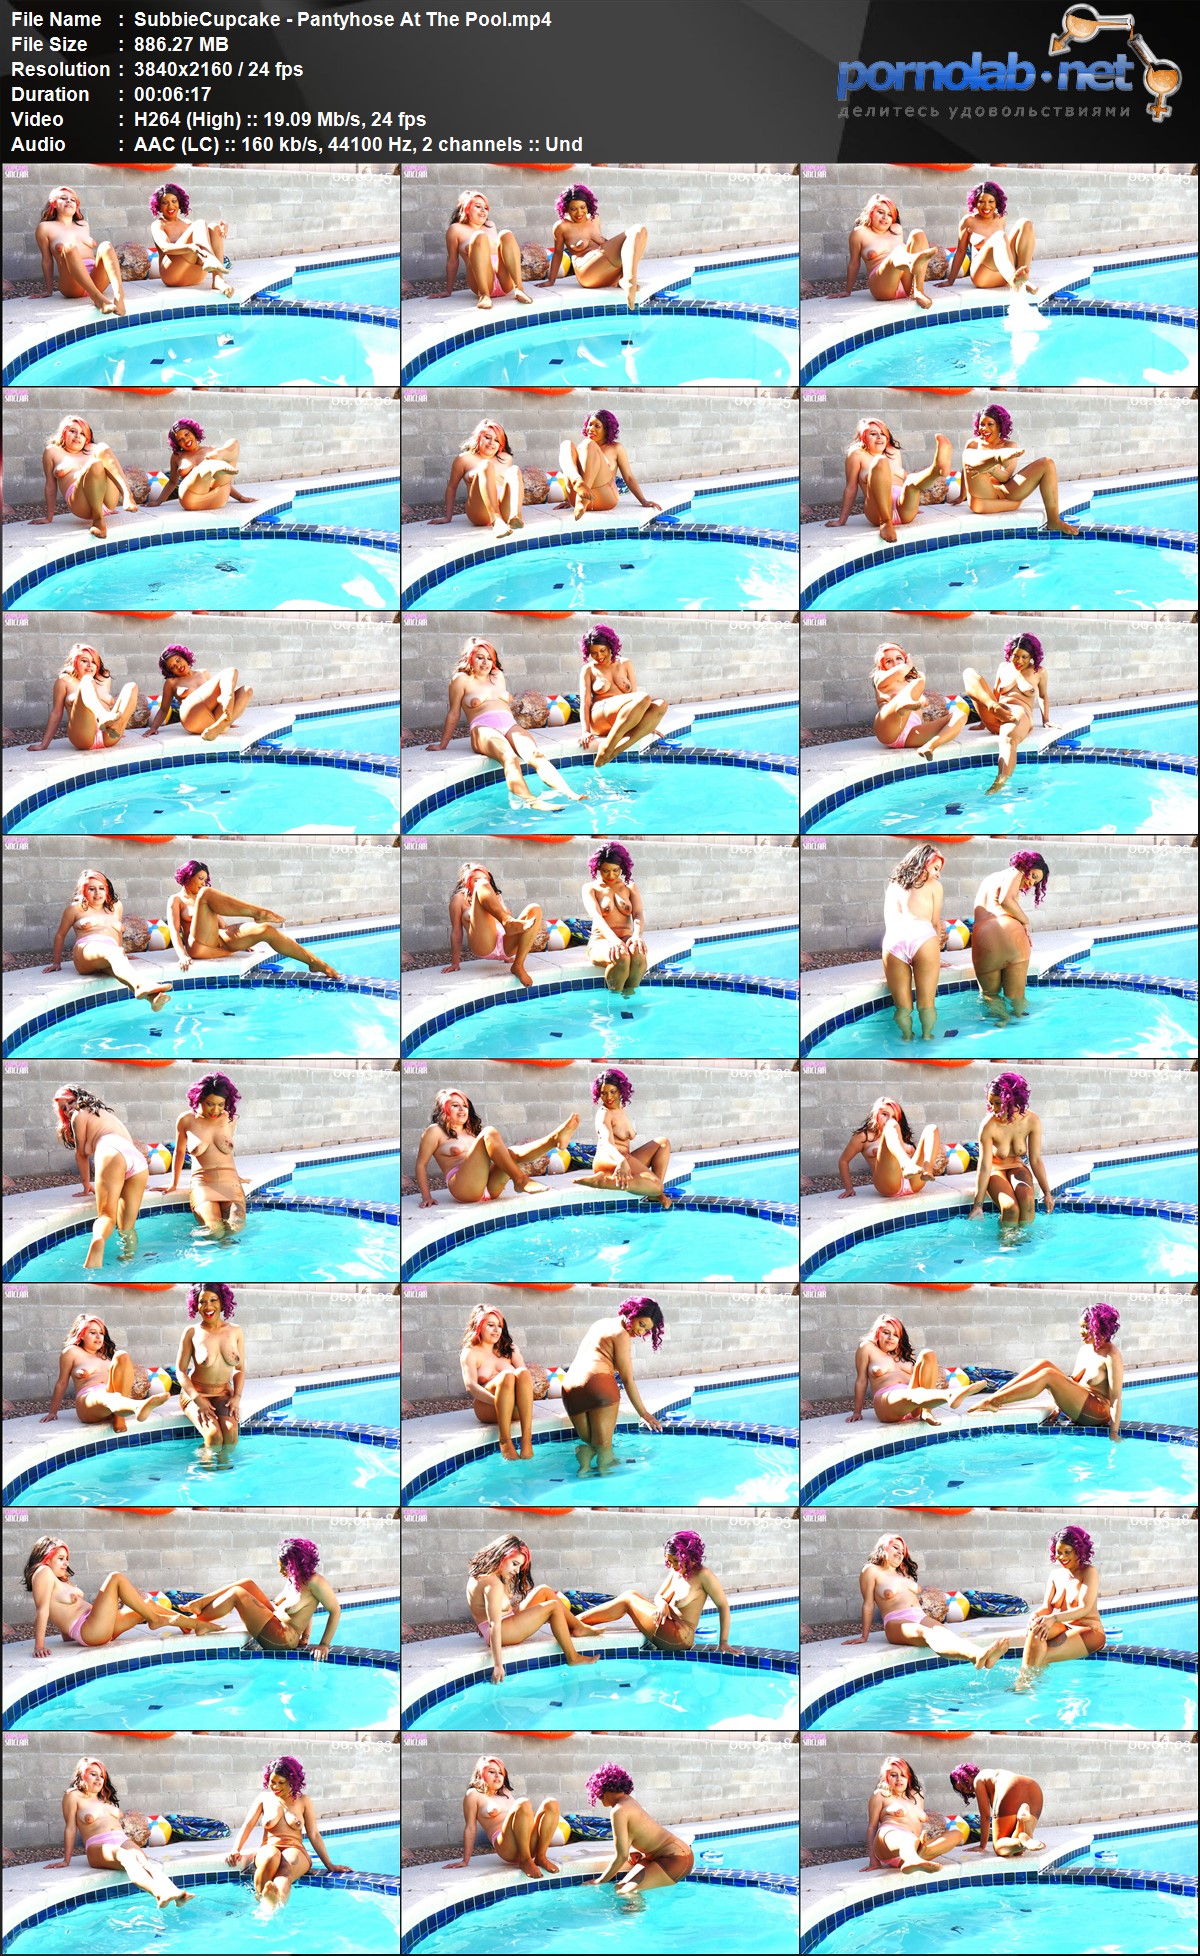 Subbie Cupcake Pantyhose At The Pool mp 4